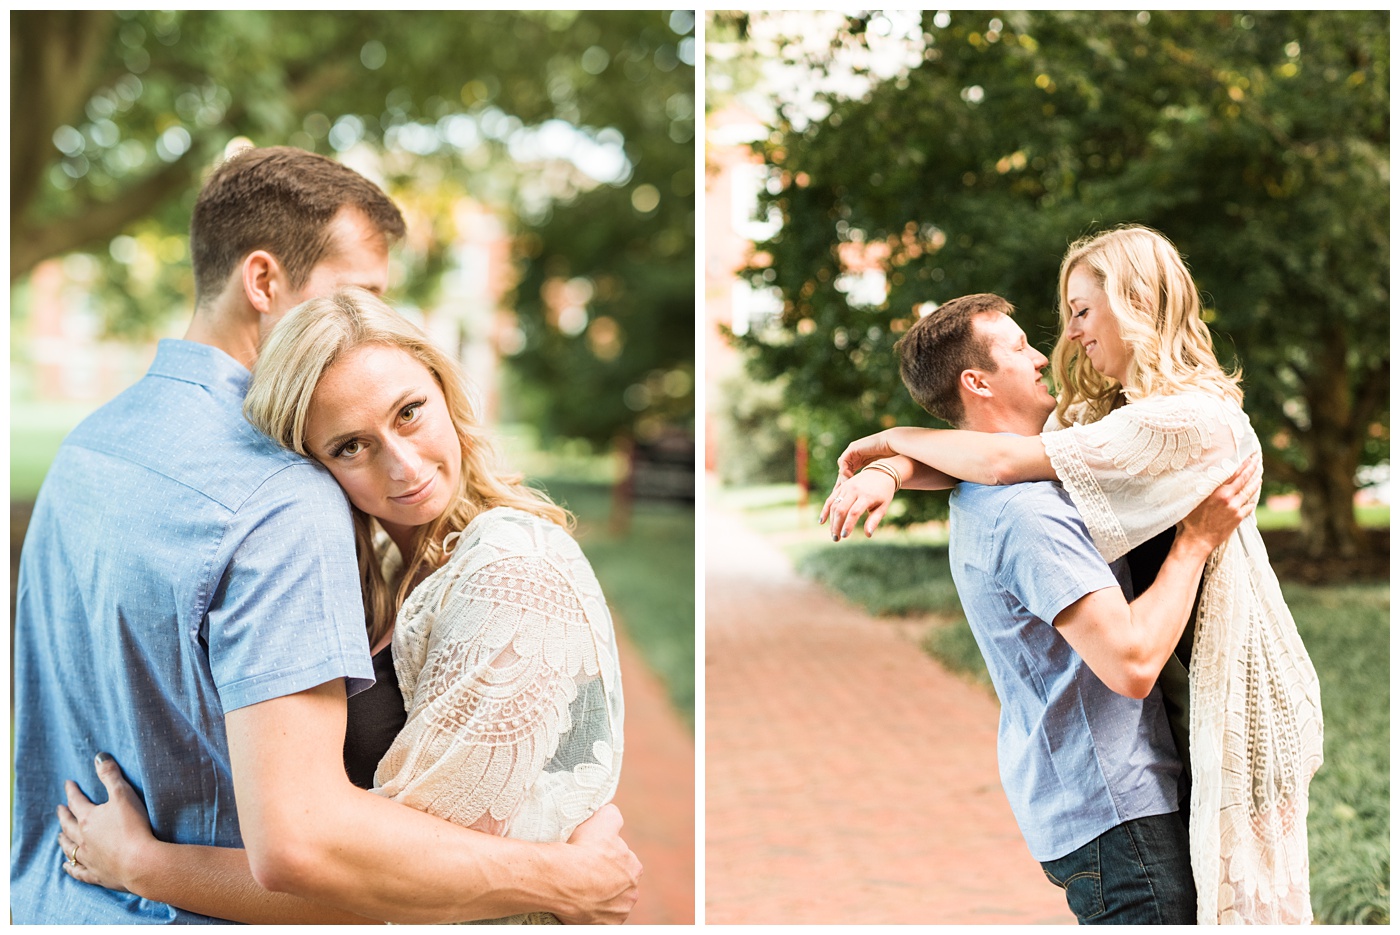 Engaged couple takes portraits at Washington College